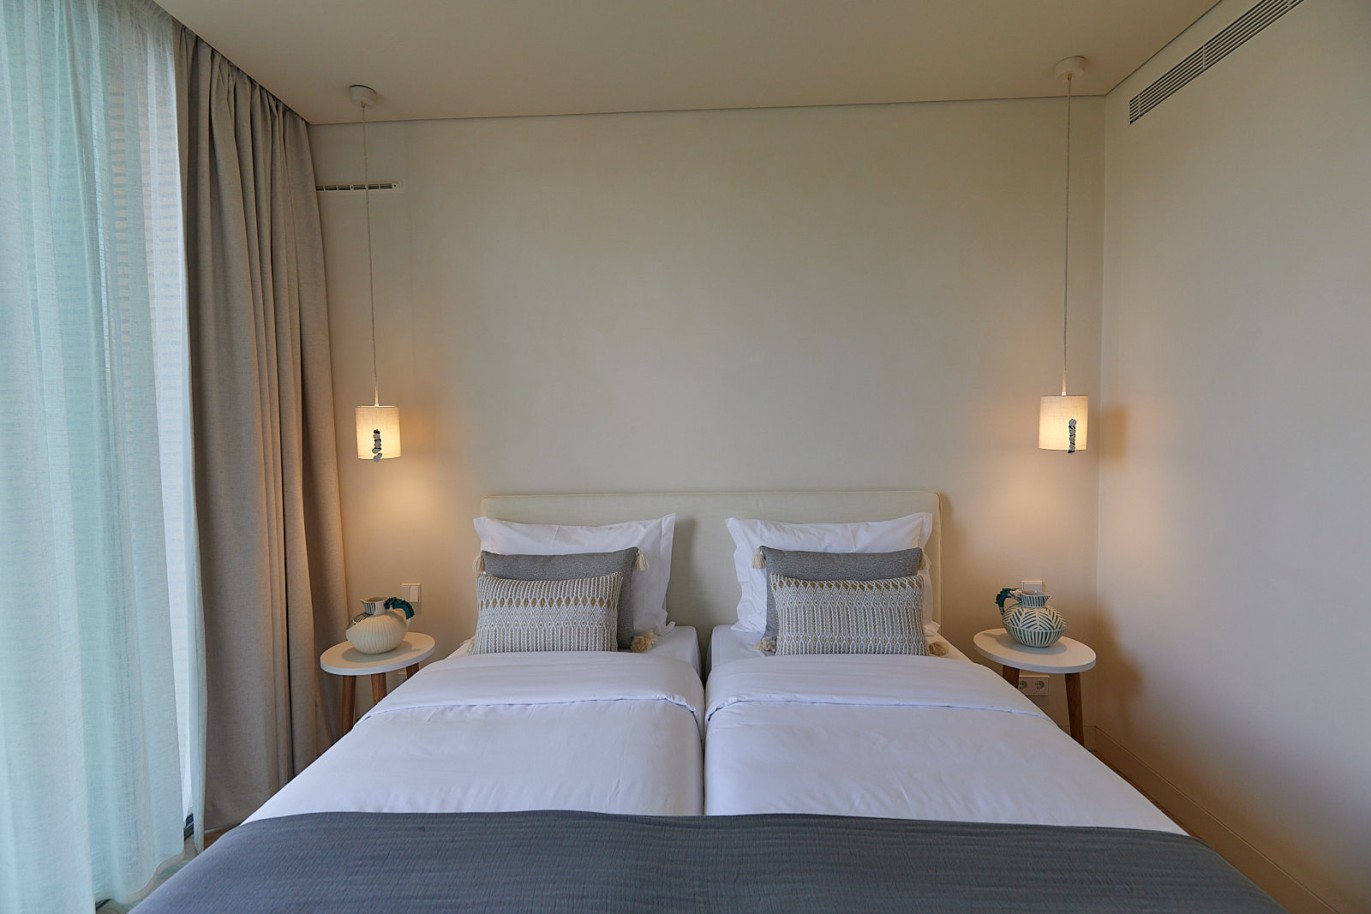 3 bedroom apartment in resort, for sale in Porches, Algarve_228603